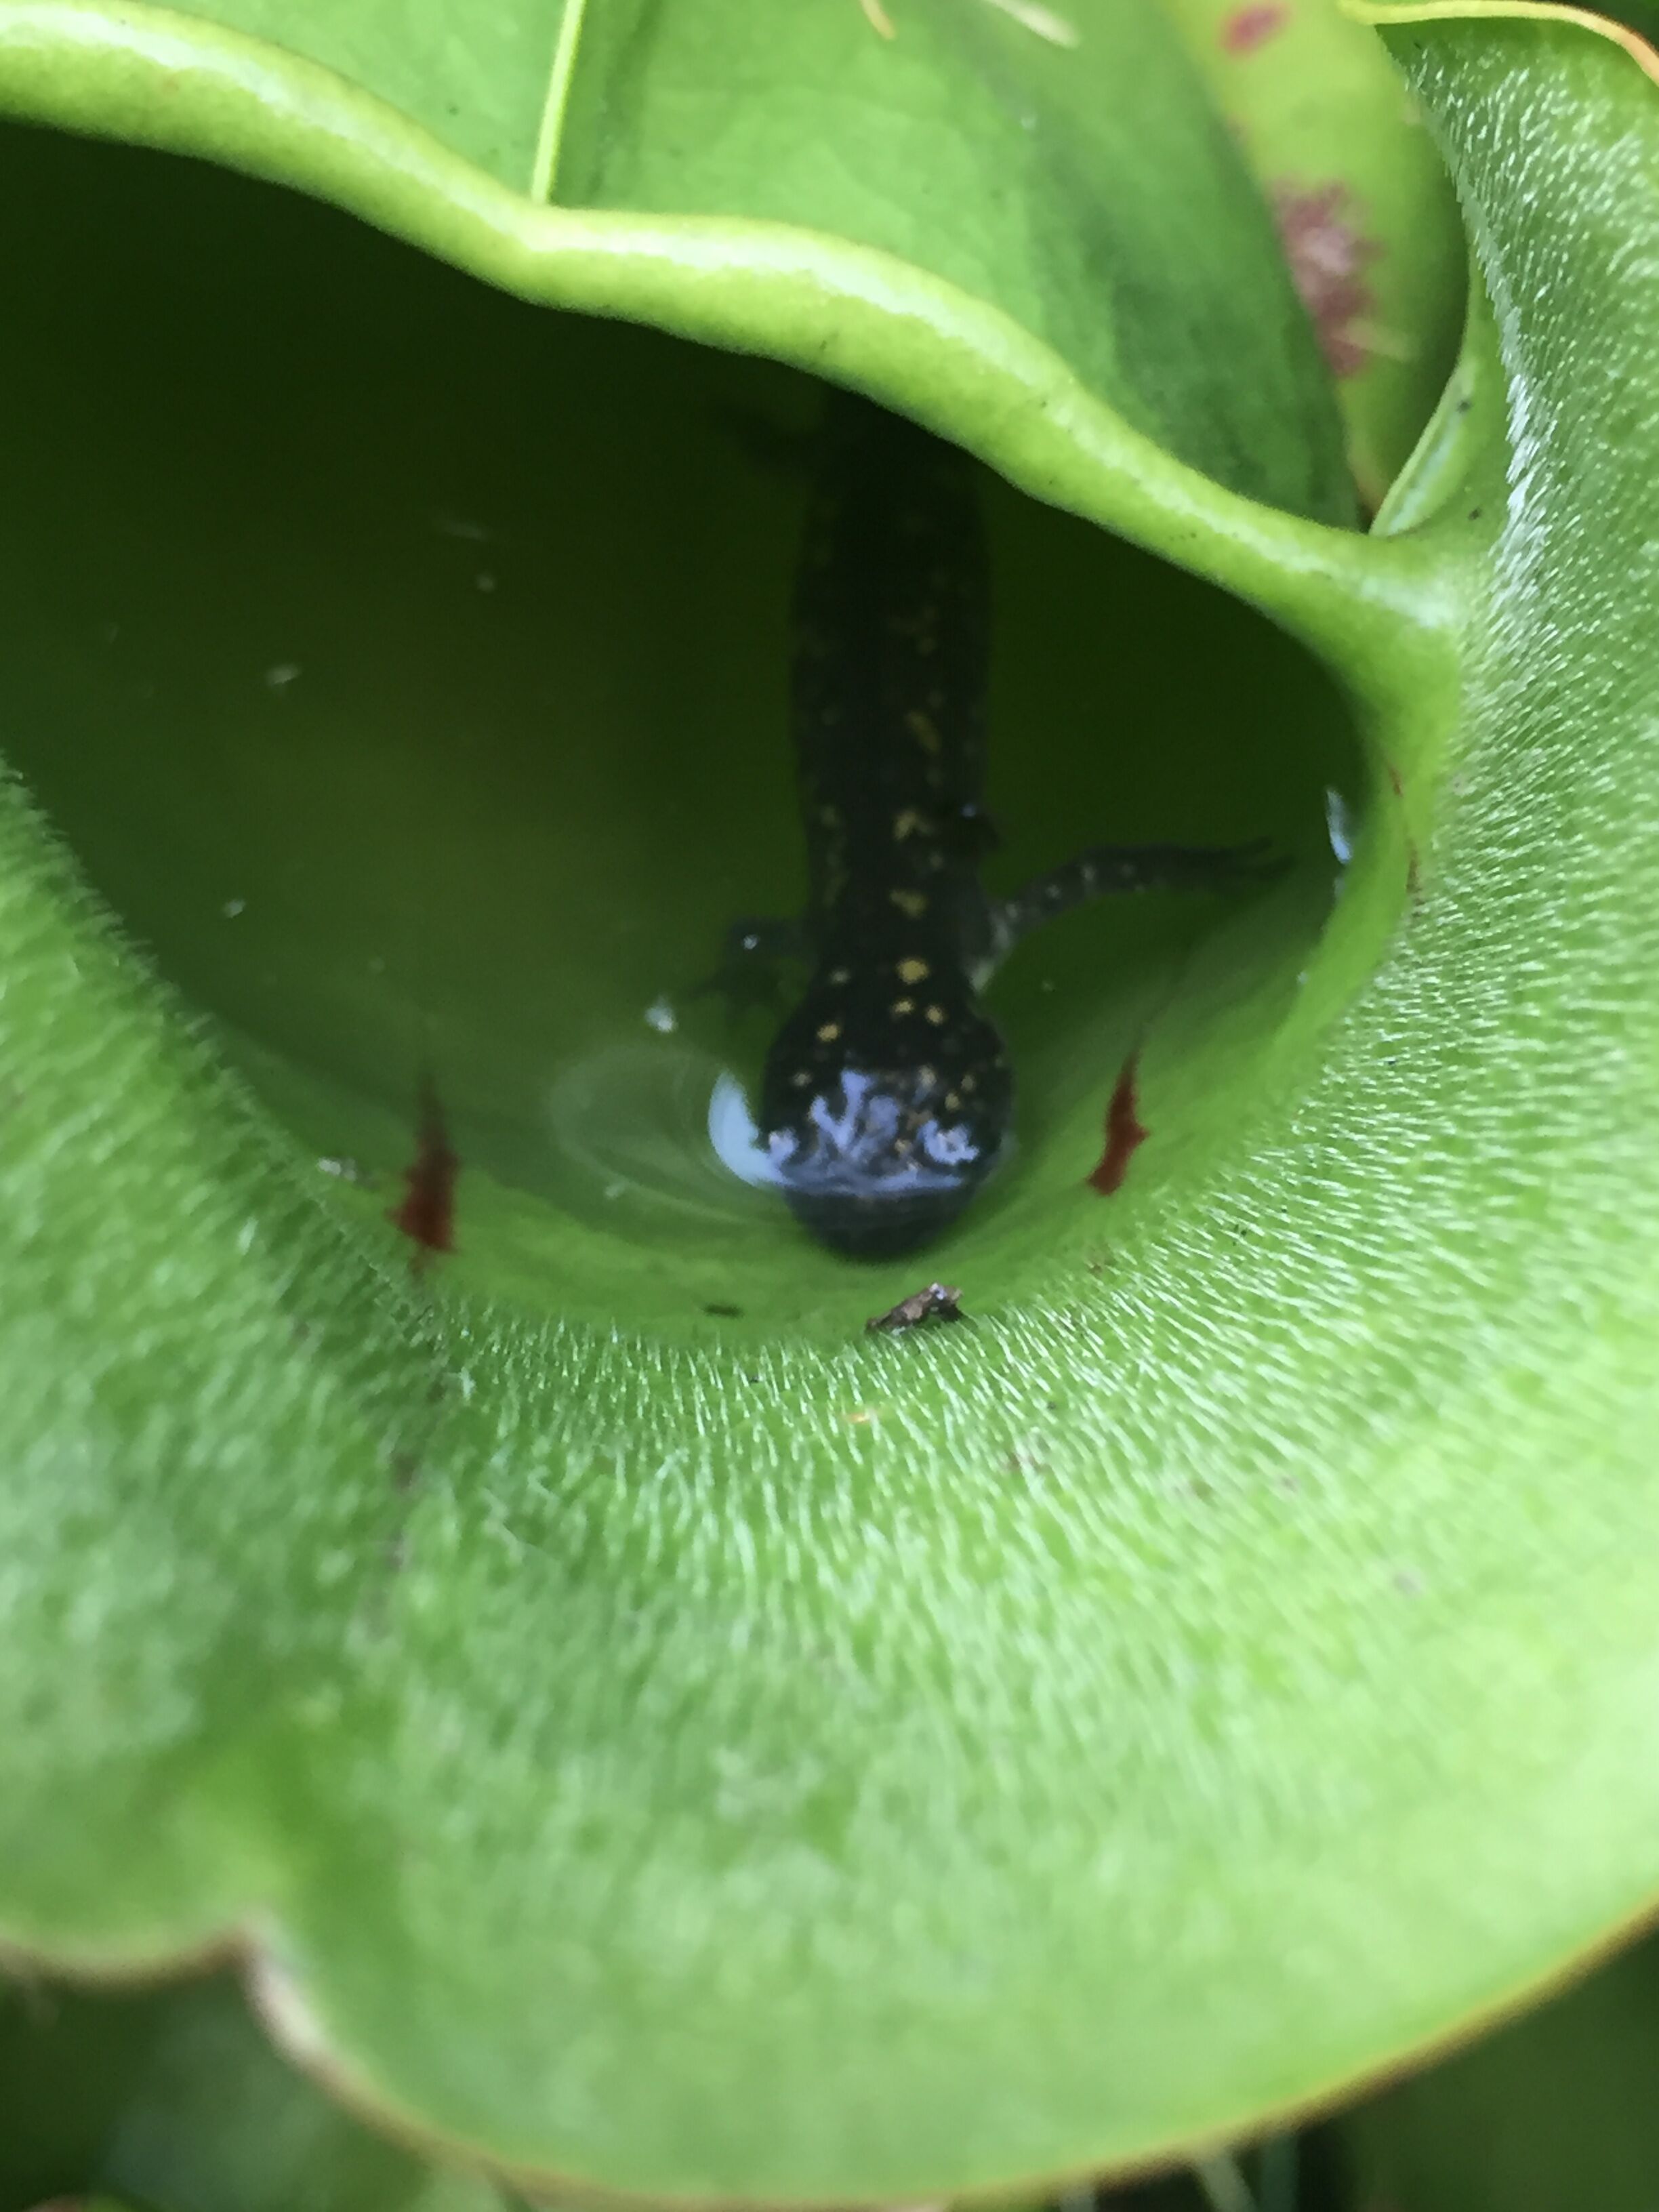 A salamander inside of a pitcher plant